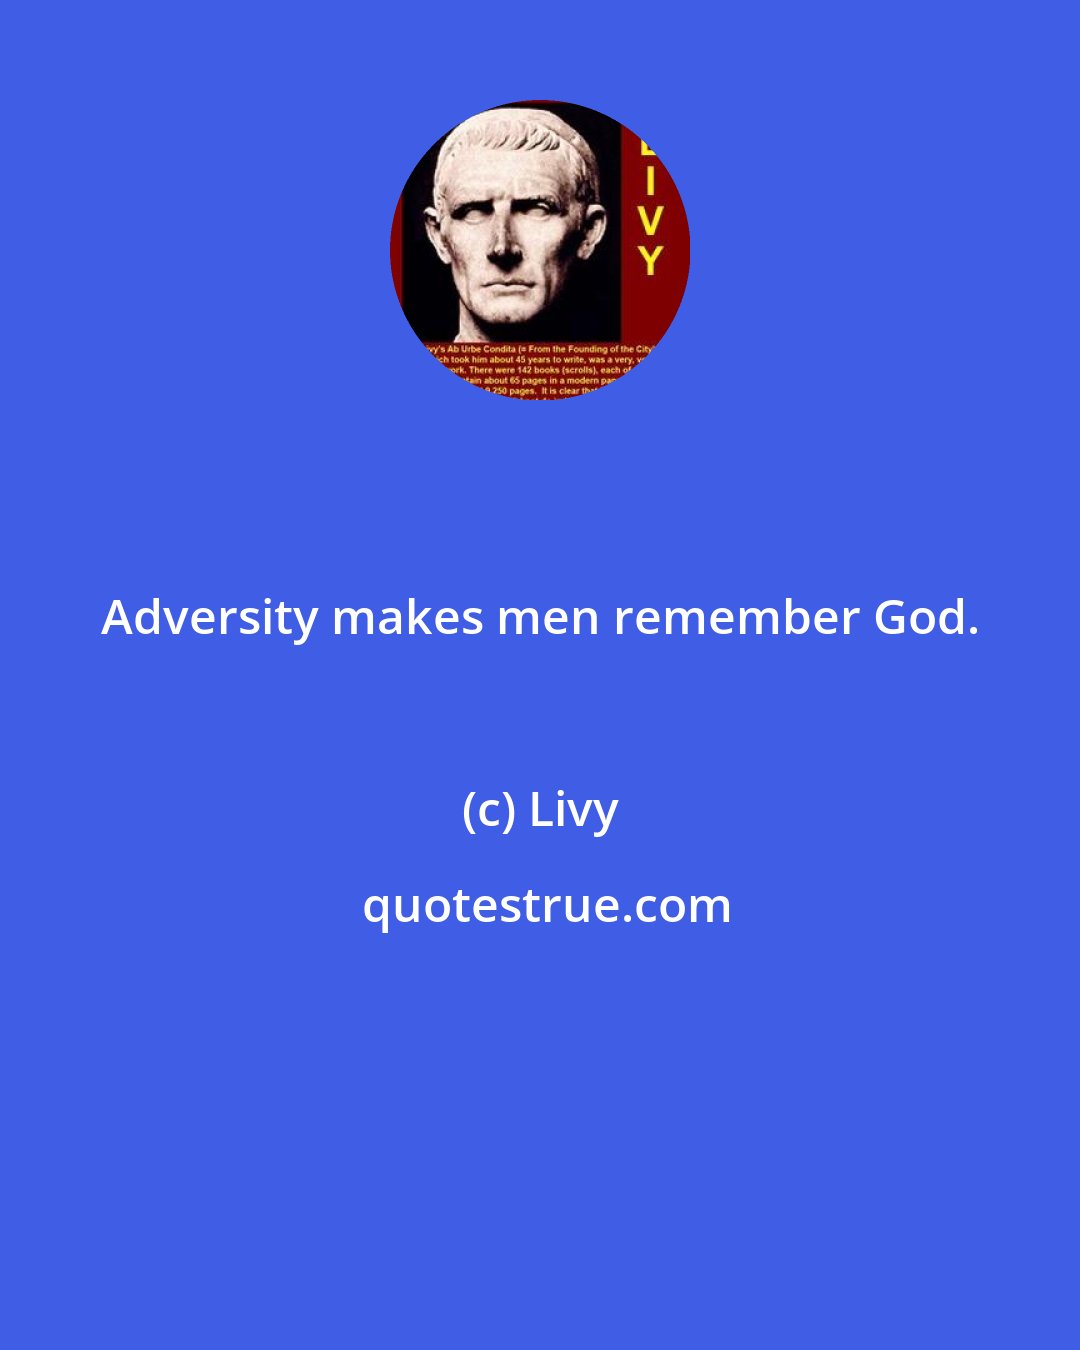 Livy: Adversity makes men remember God.